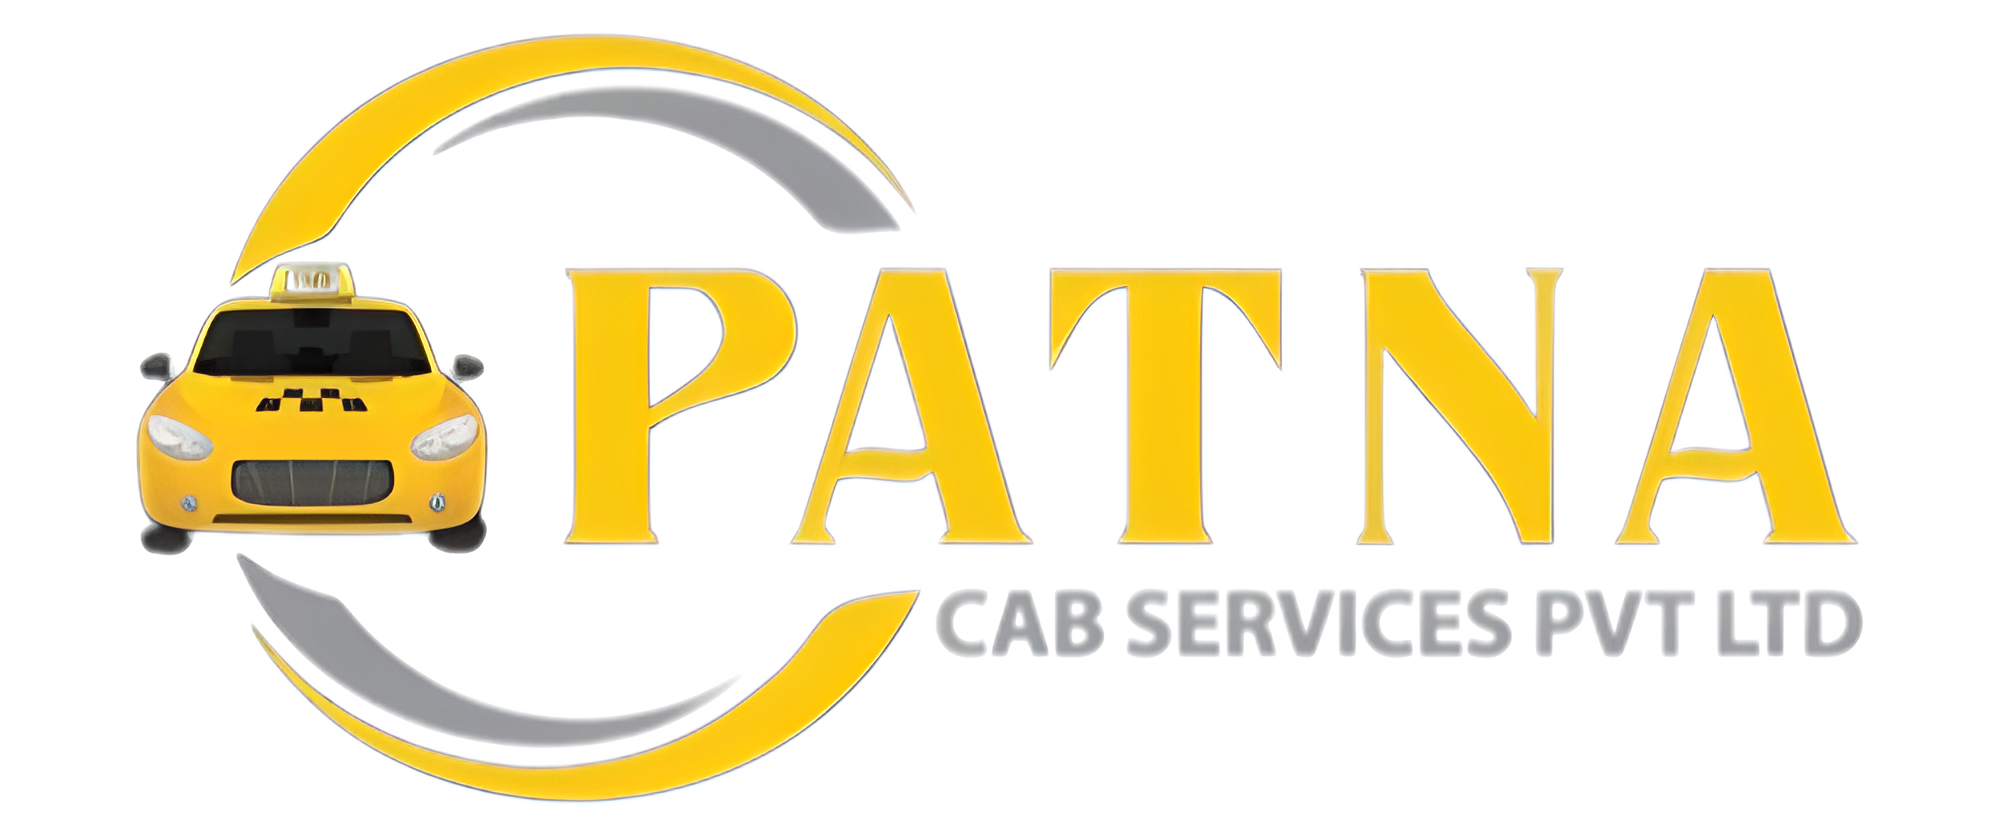 best taxi service in patna